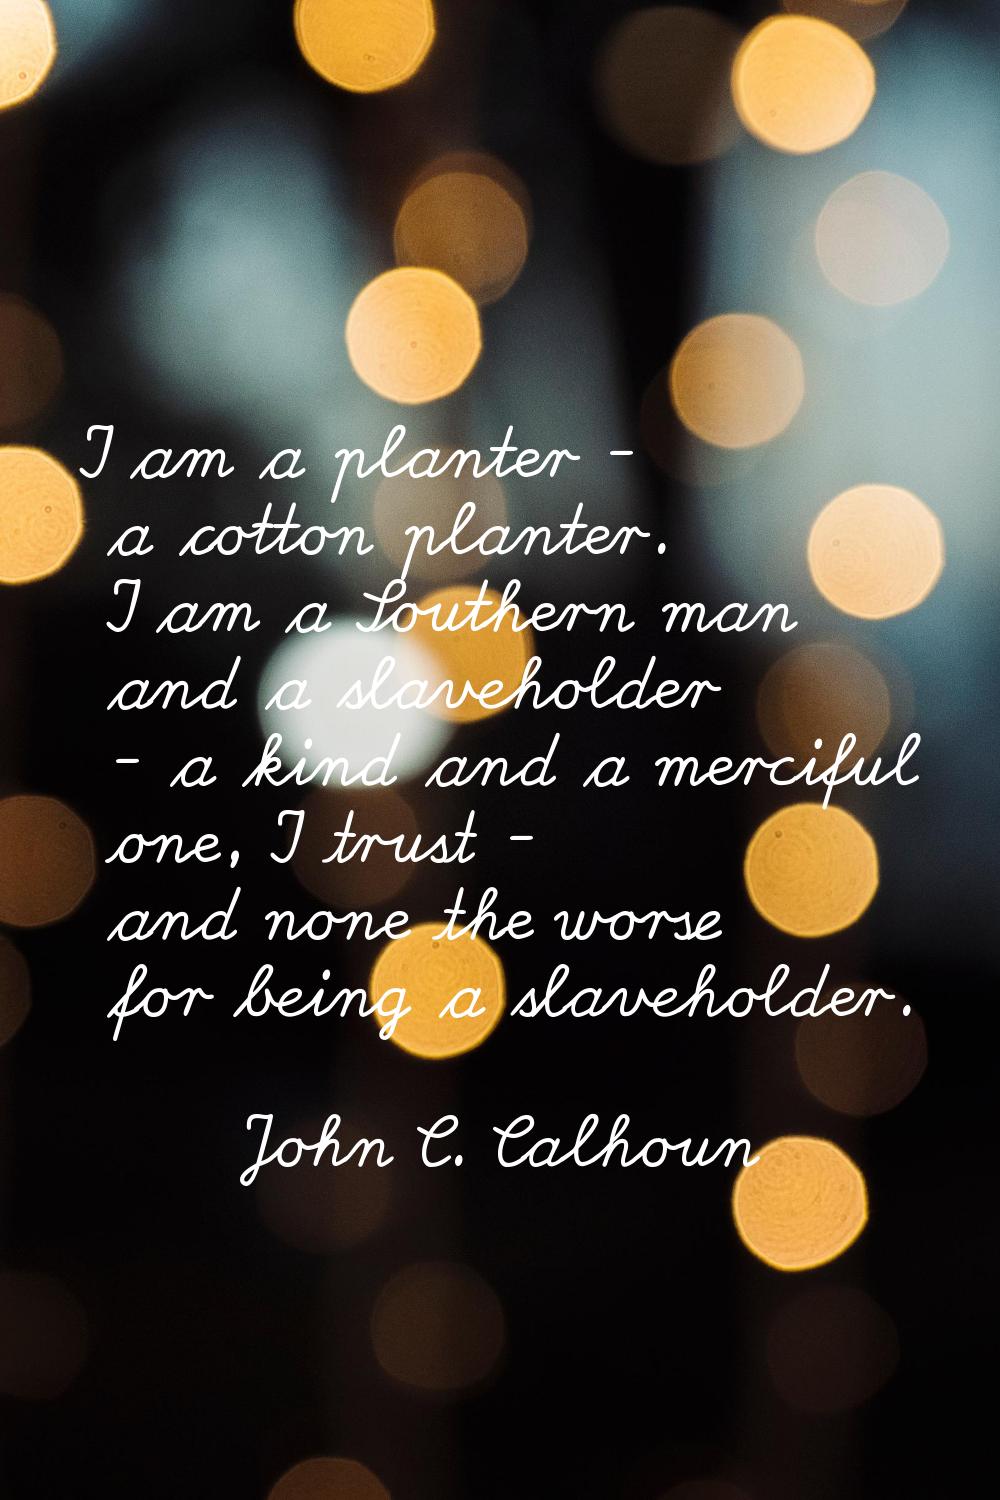 I am a planter - a cotton planter. I am a Southern man and a slaveholder - a kind and a merciful on